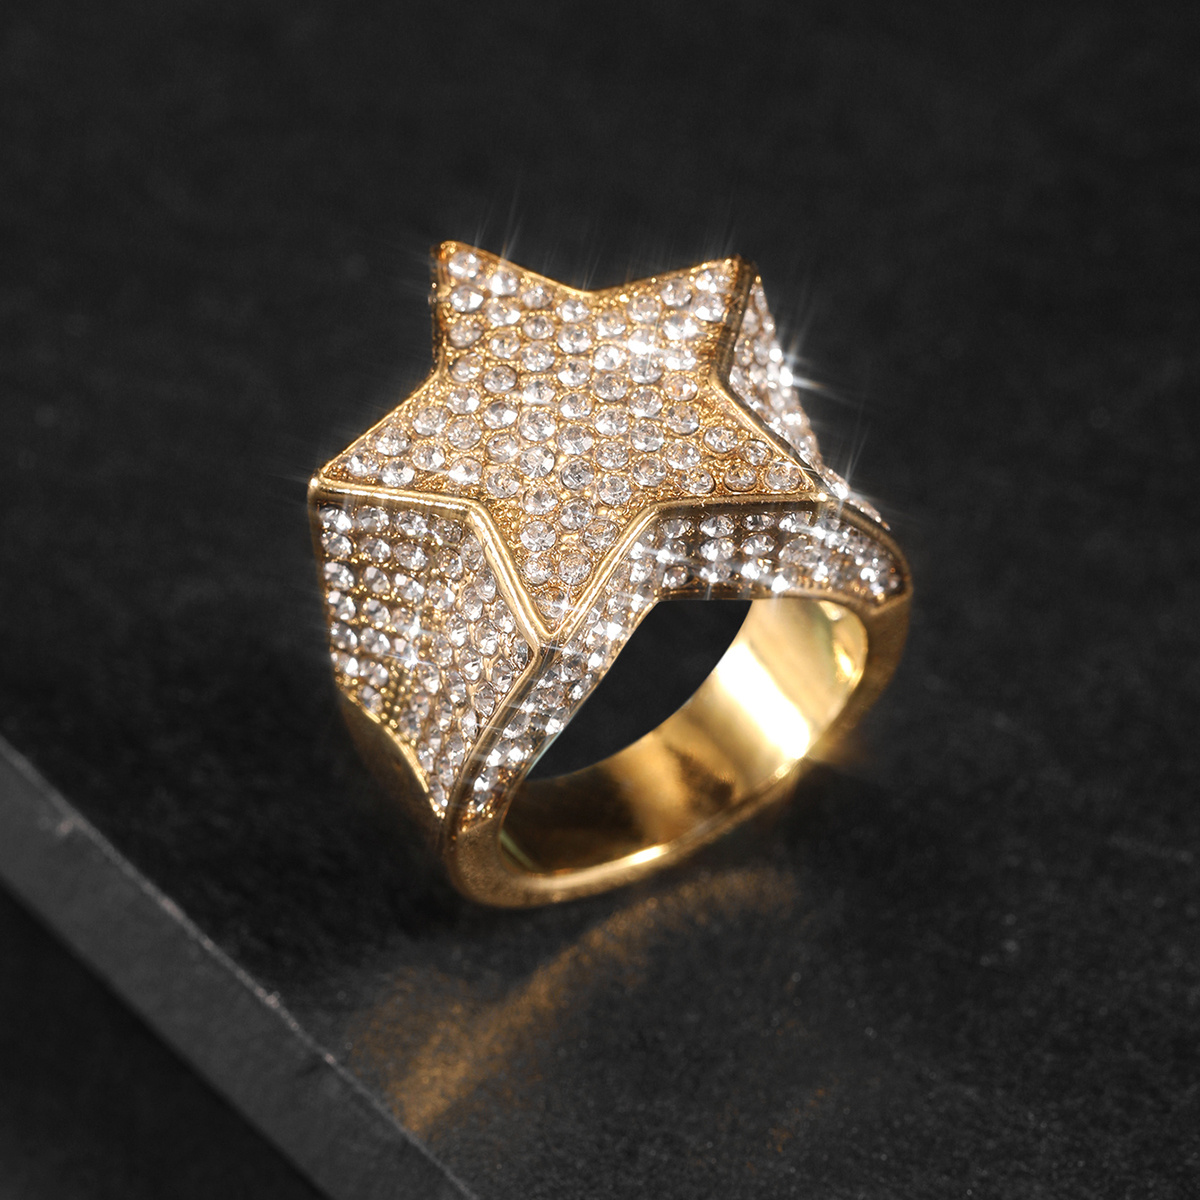 Star Design Ring, Punk Band Pentagram Shaped Ring For Men And Women's Novel Jewelry